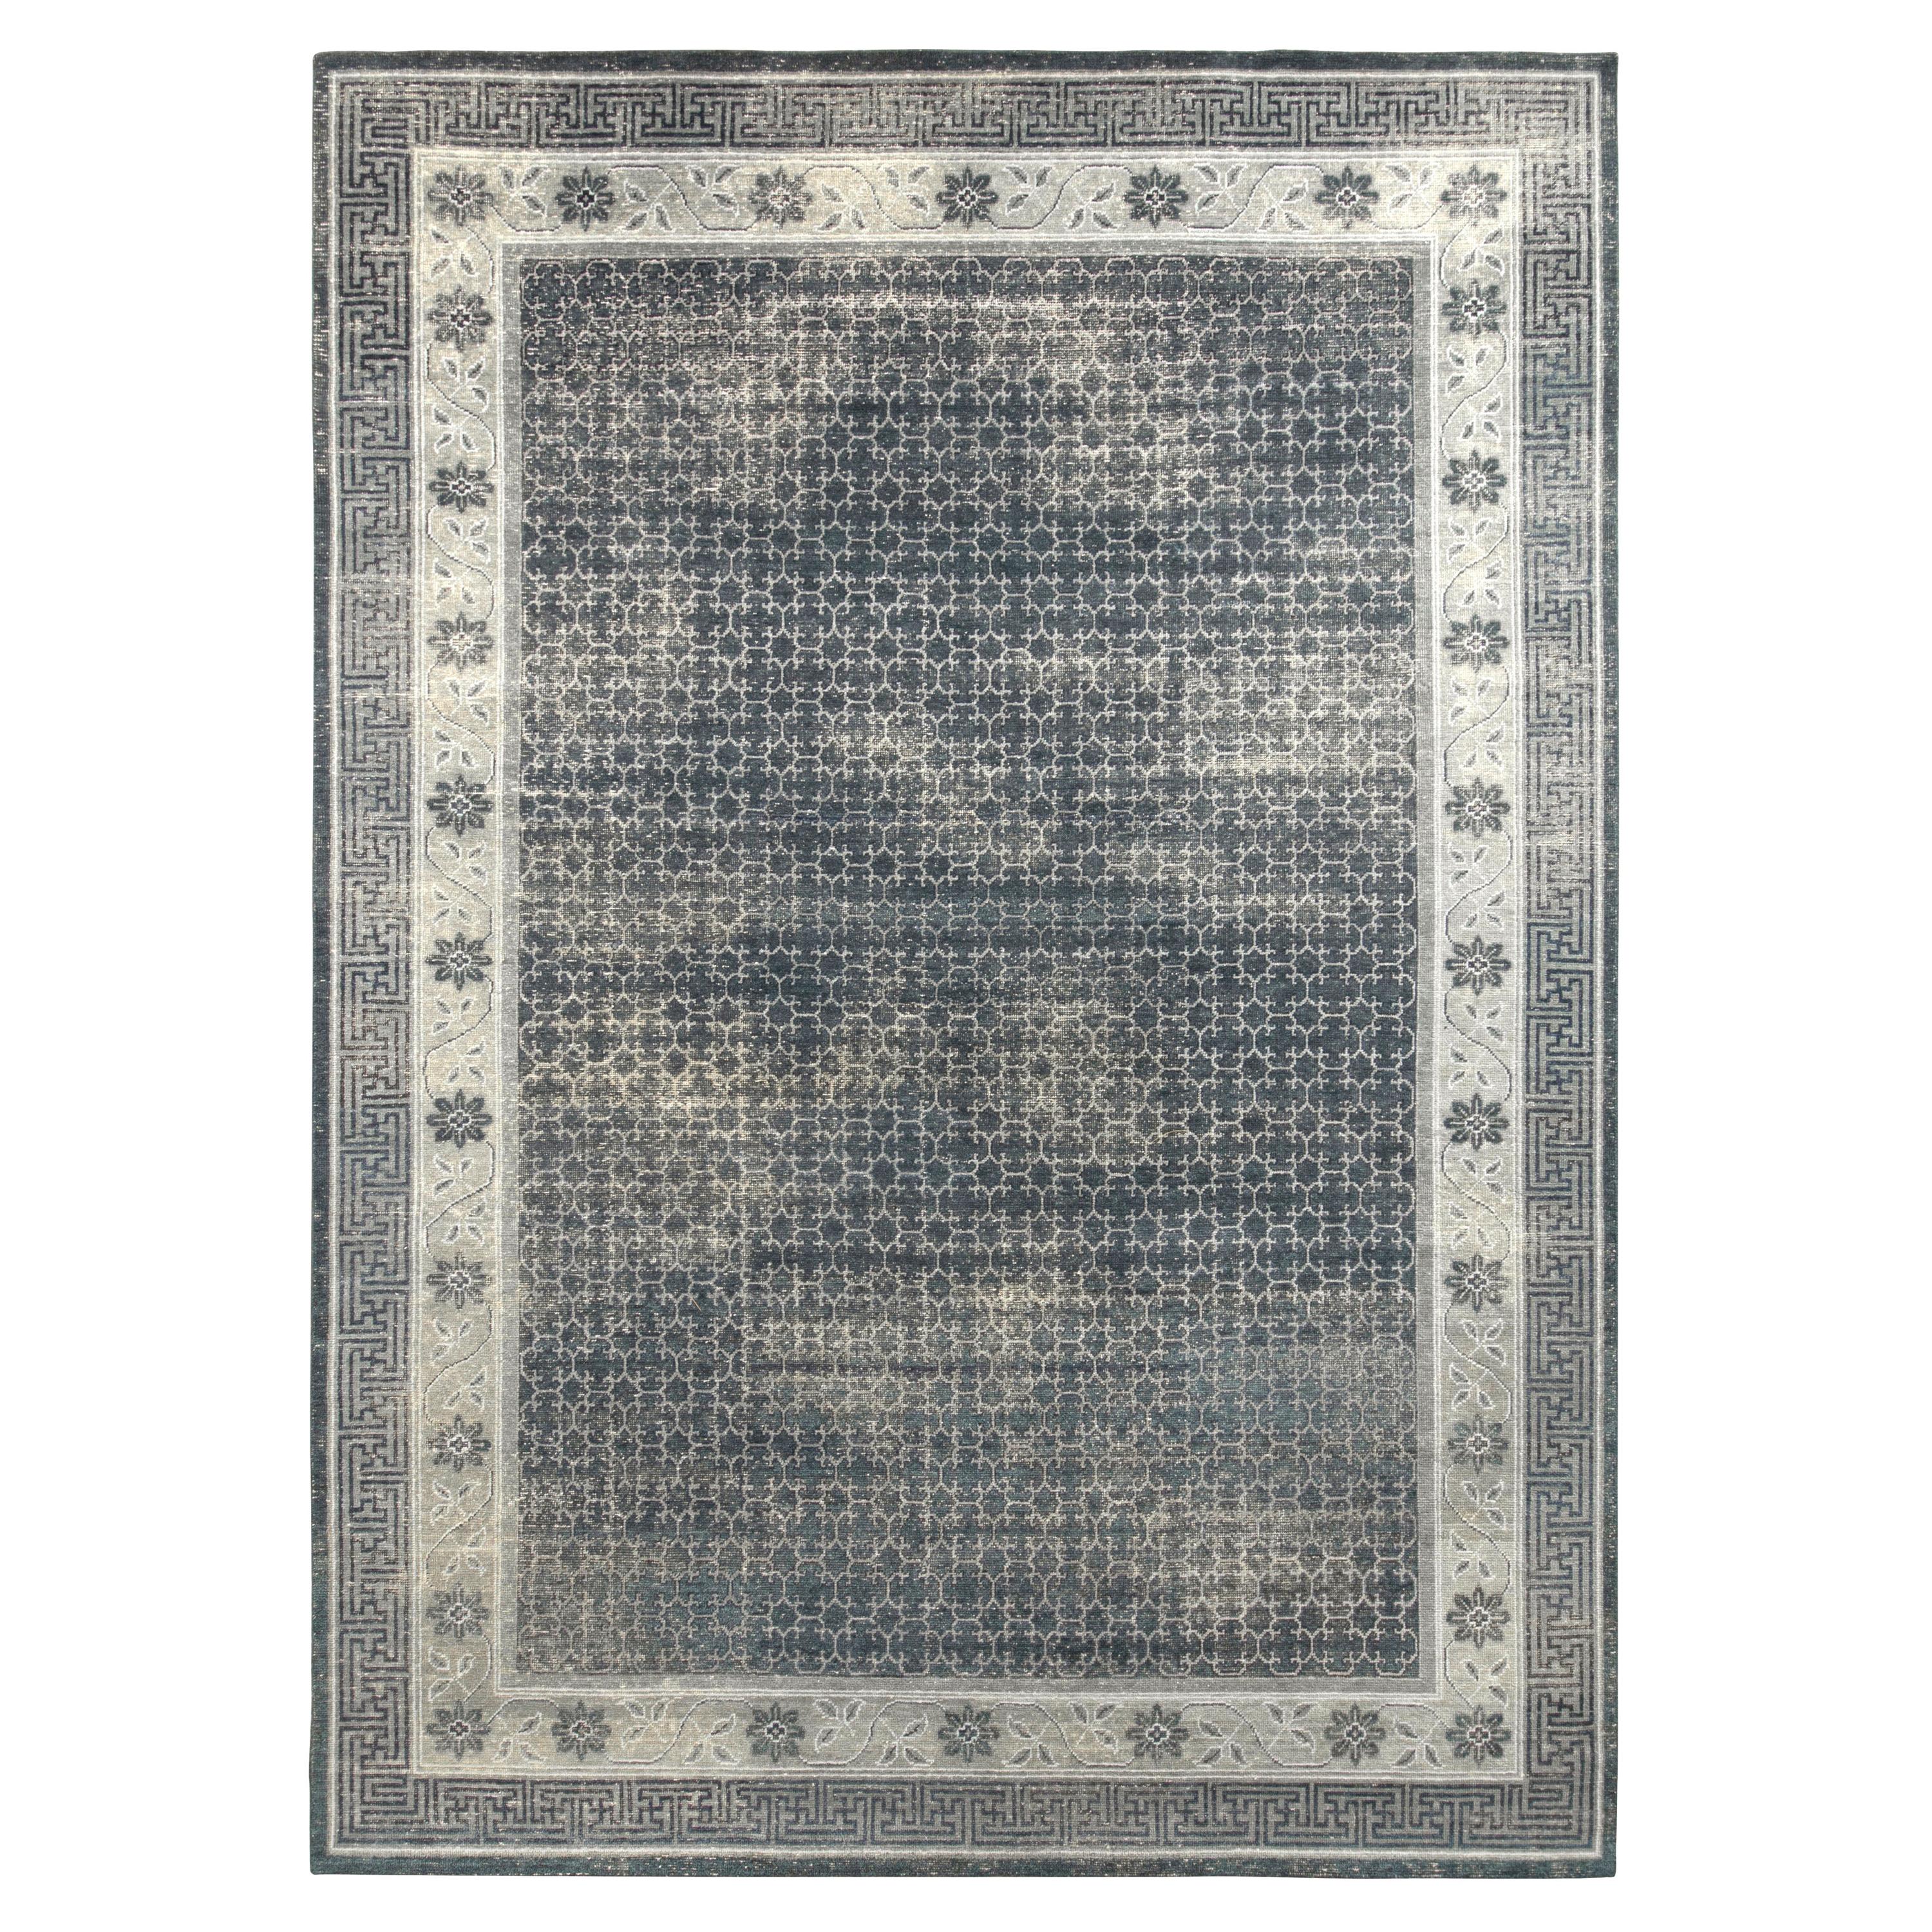 Teppich & Kilims, maßgefertigter Teppich im Khotan-Stil, blau-grau-geometrisches Muster